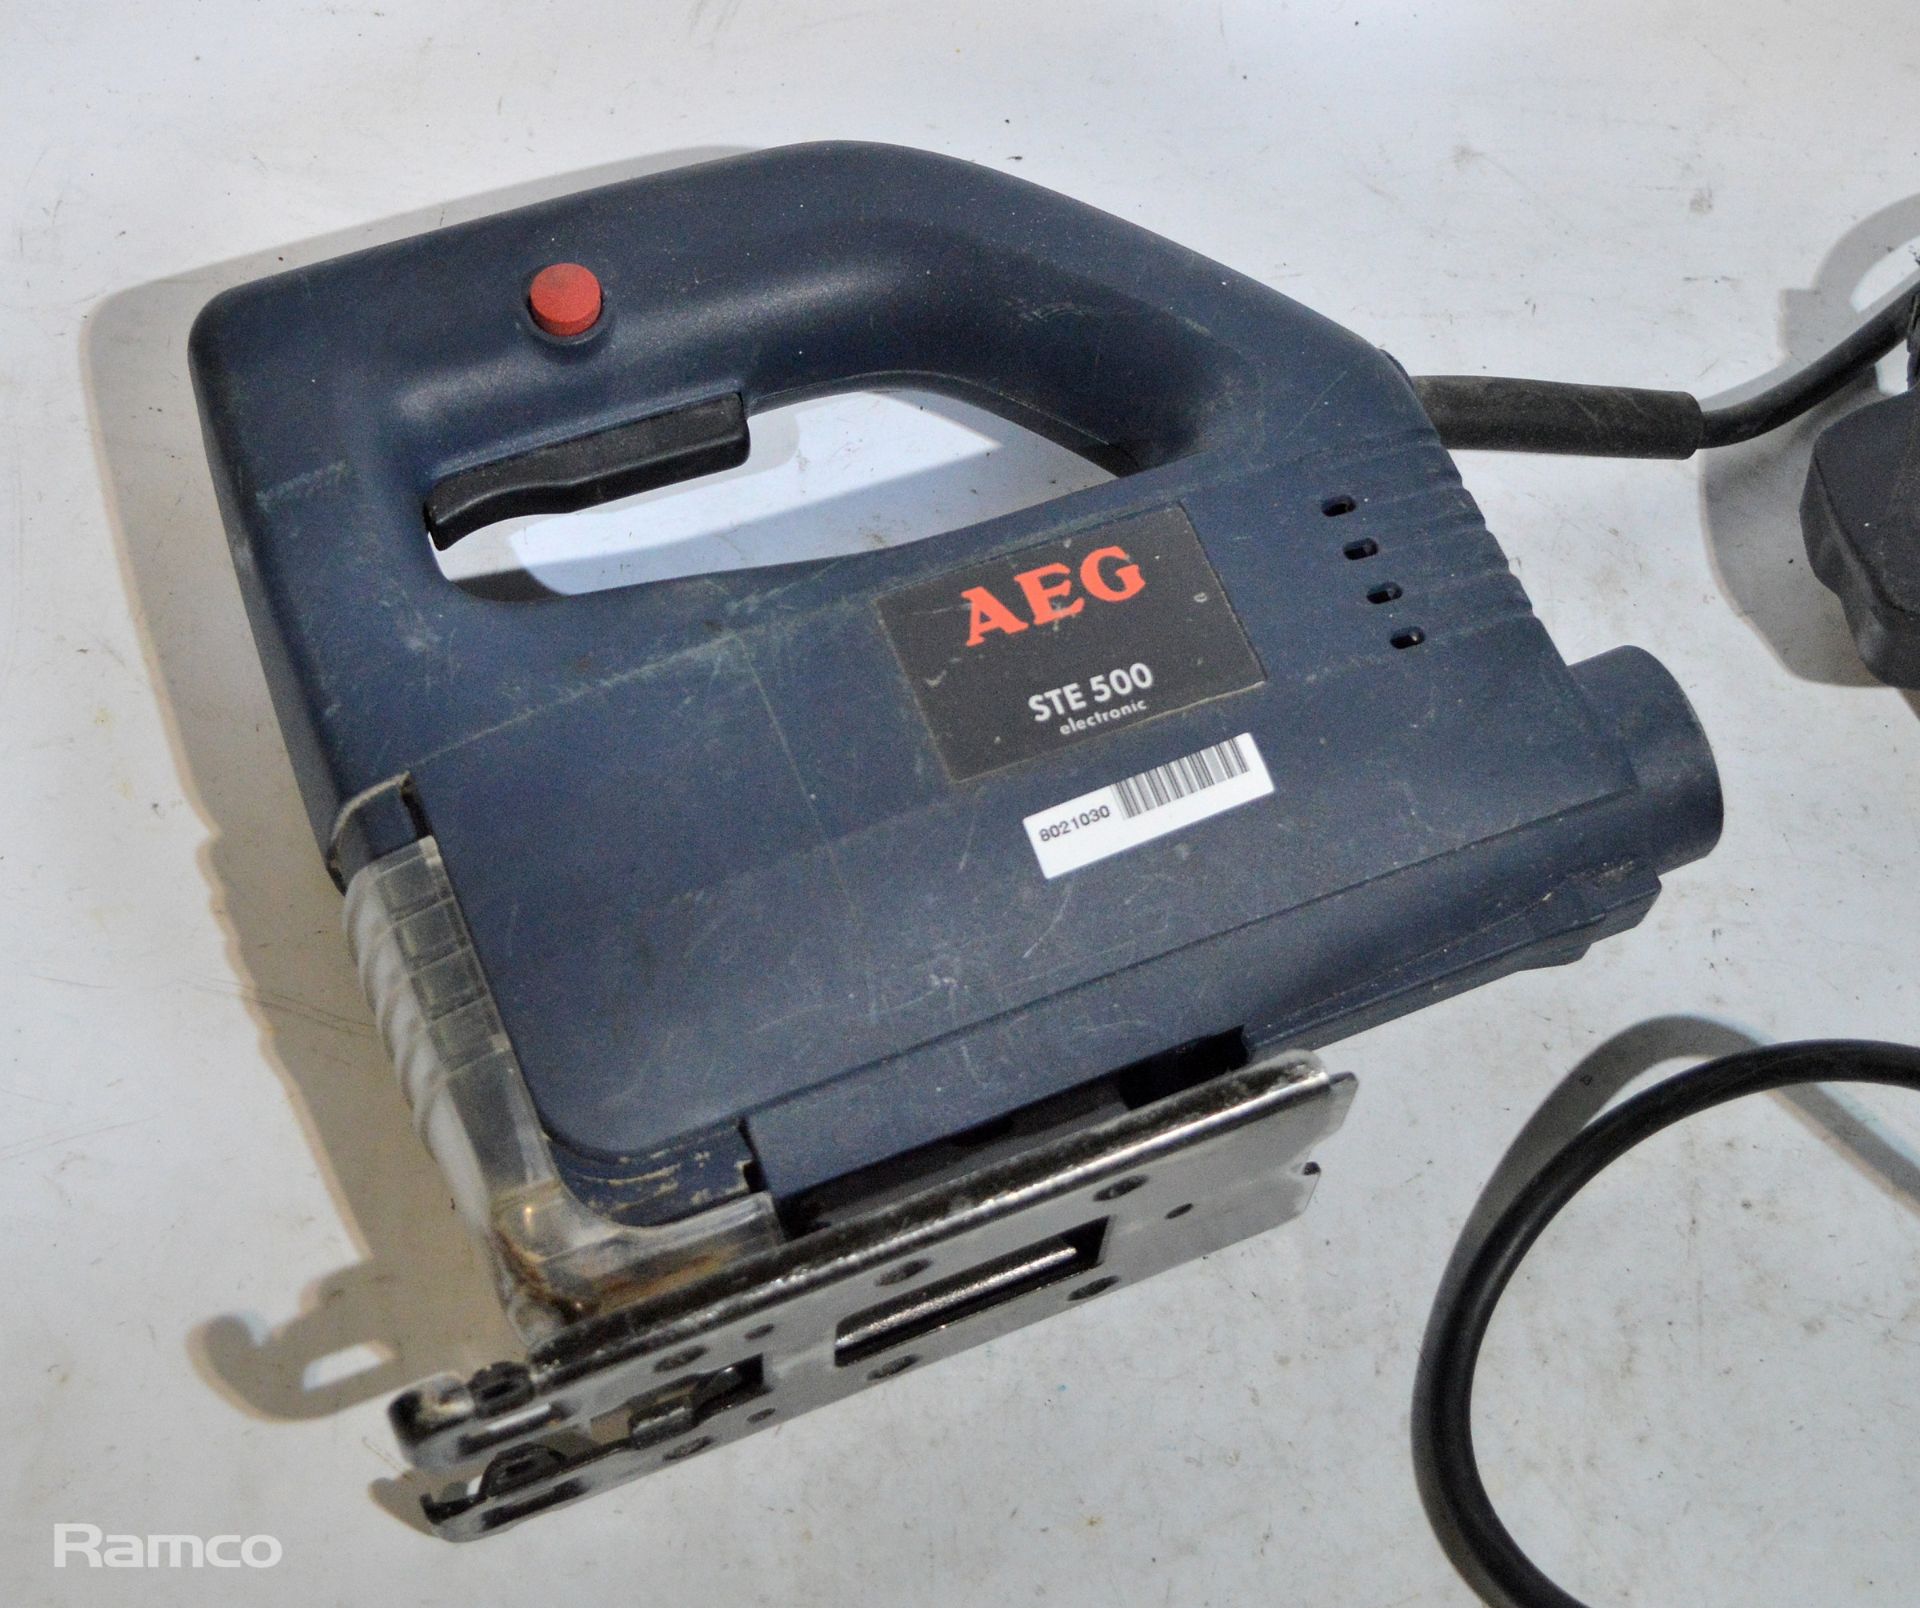 AEG STE 500 electric jigsaw - Image 4 of 5